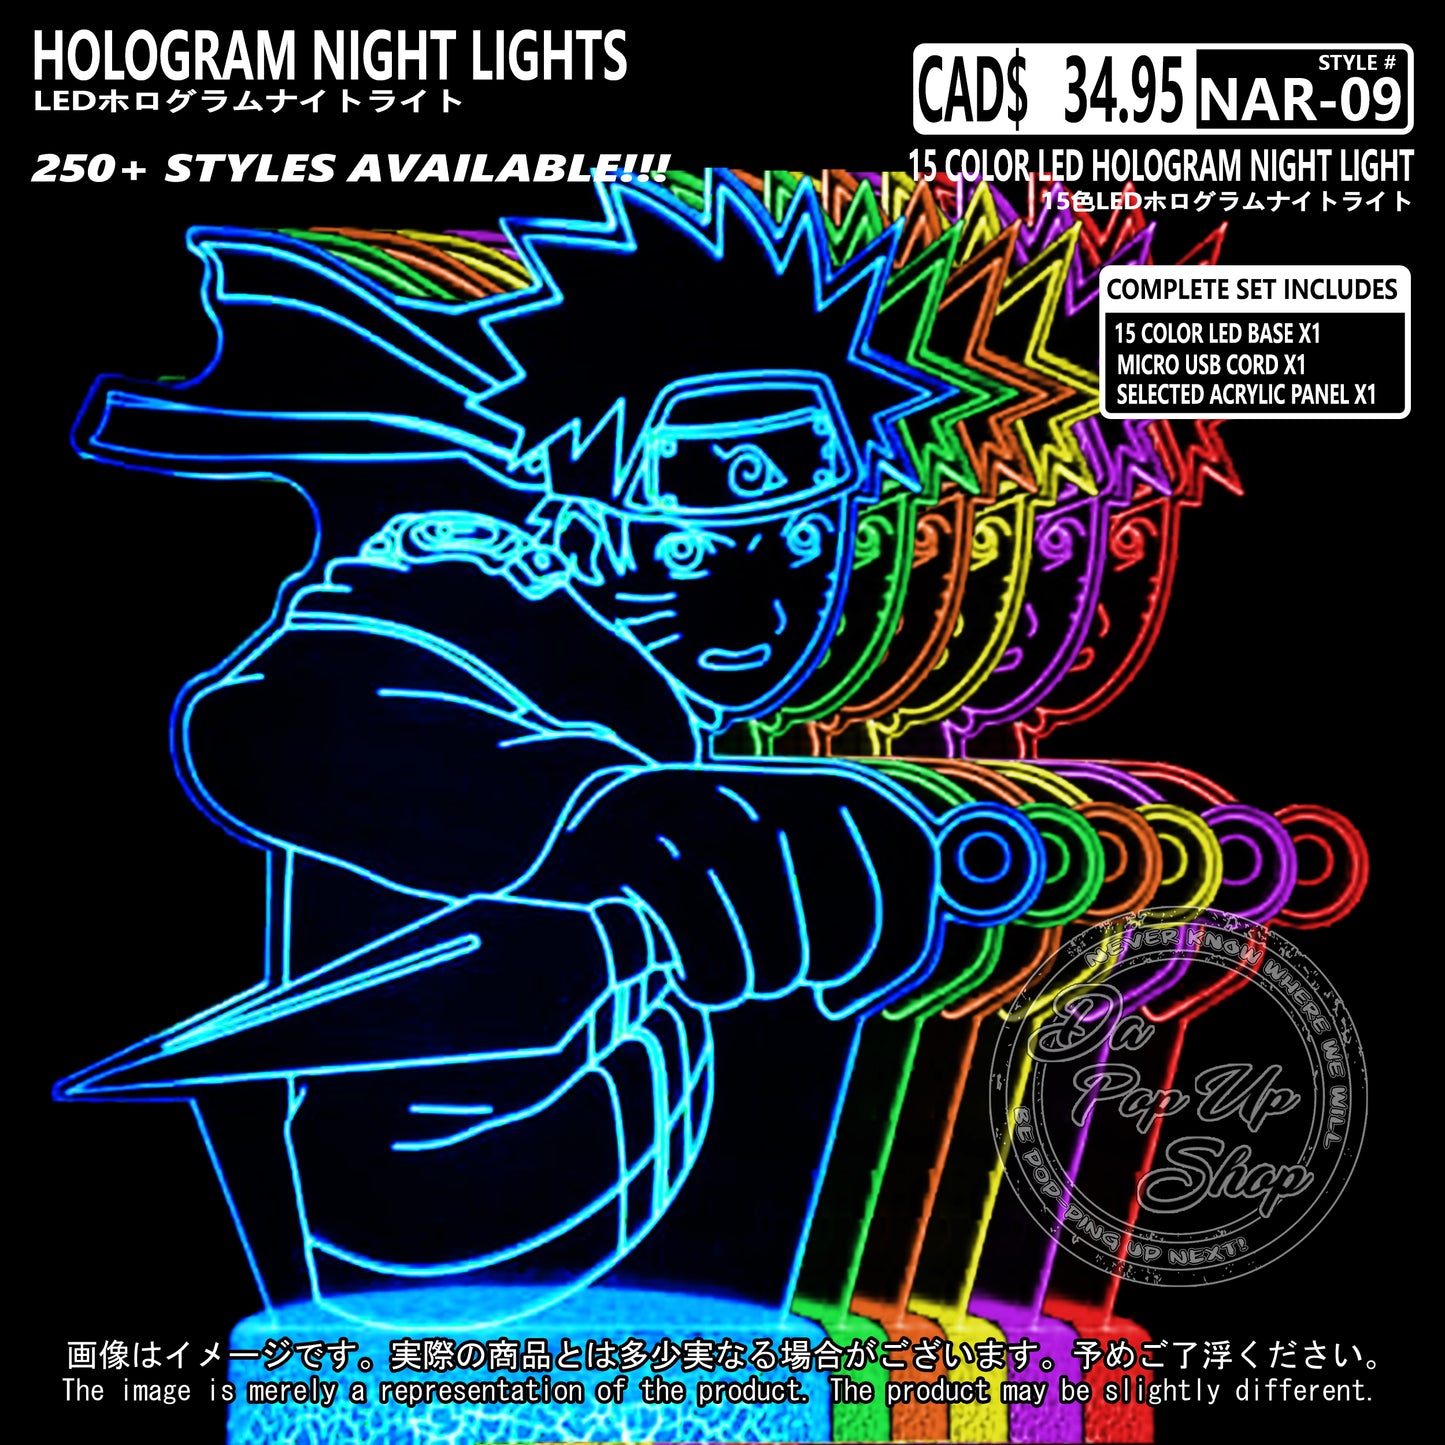 (NAR-09) Naruto Hologram LED Night Light